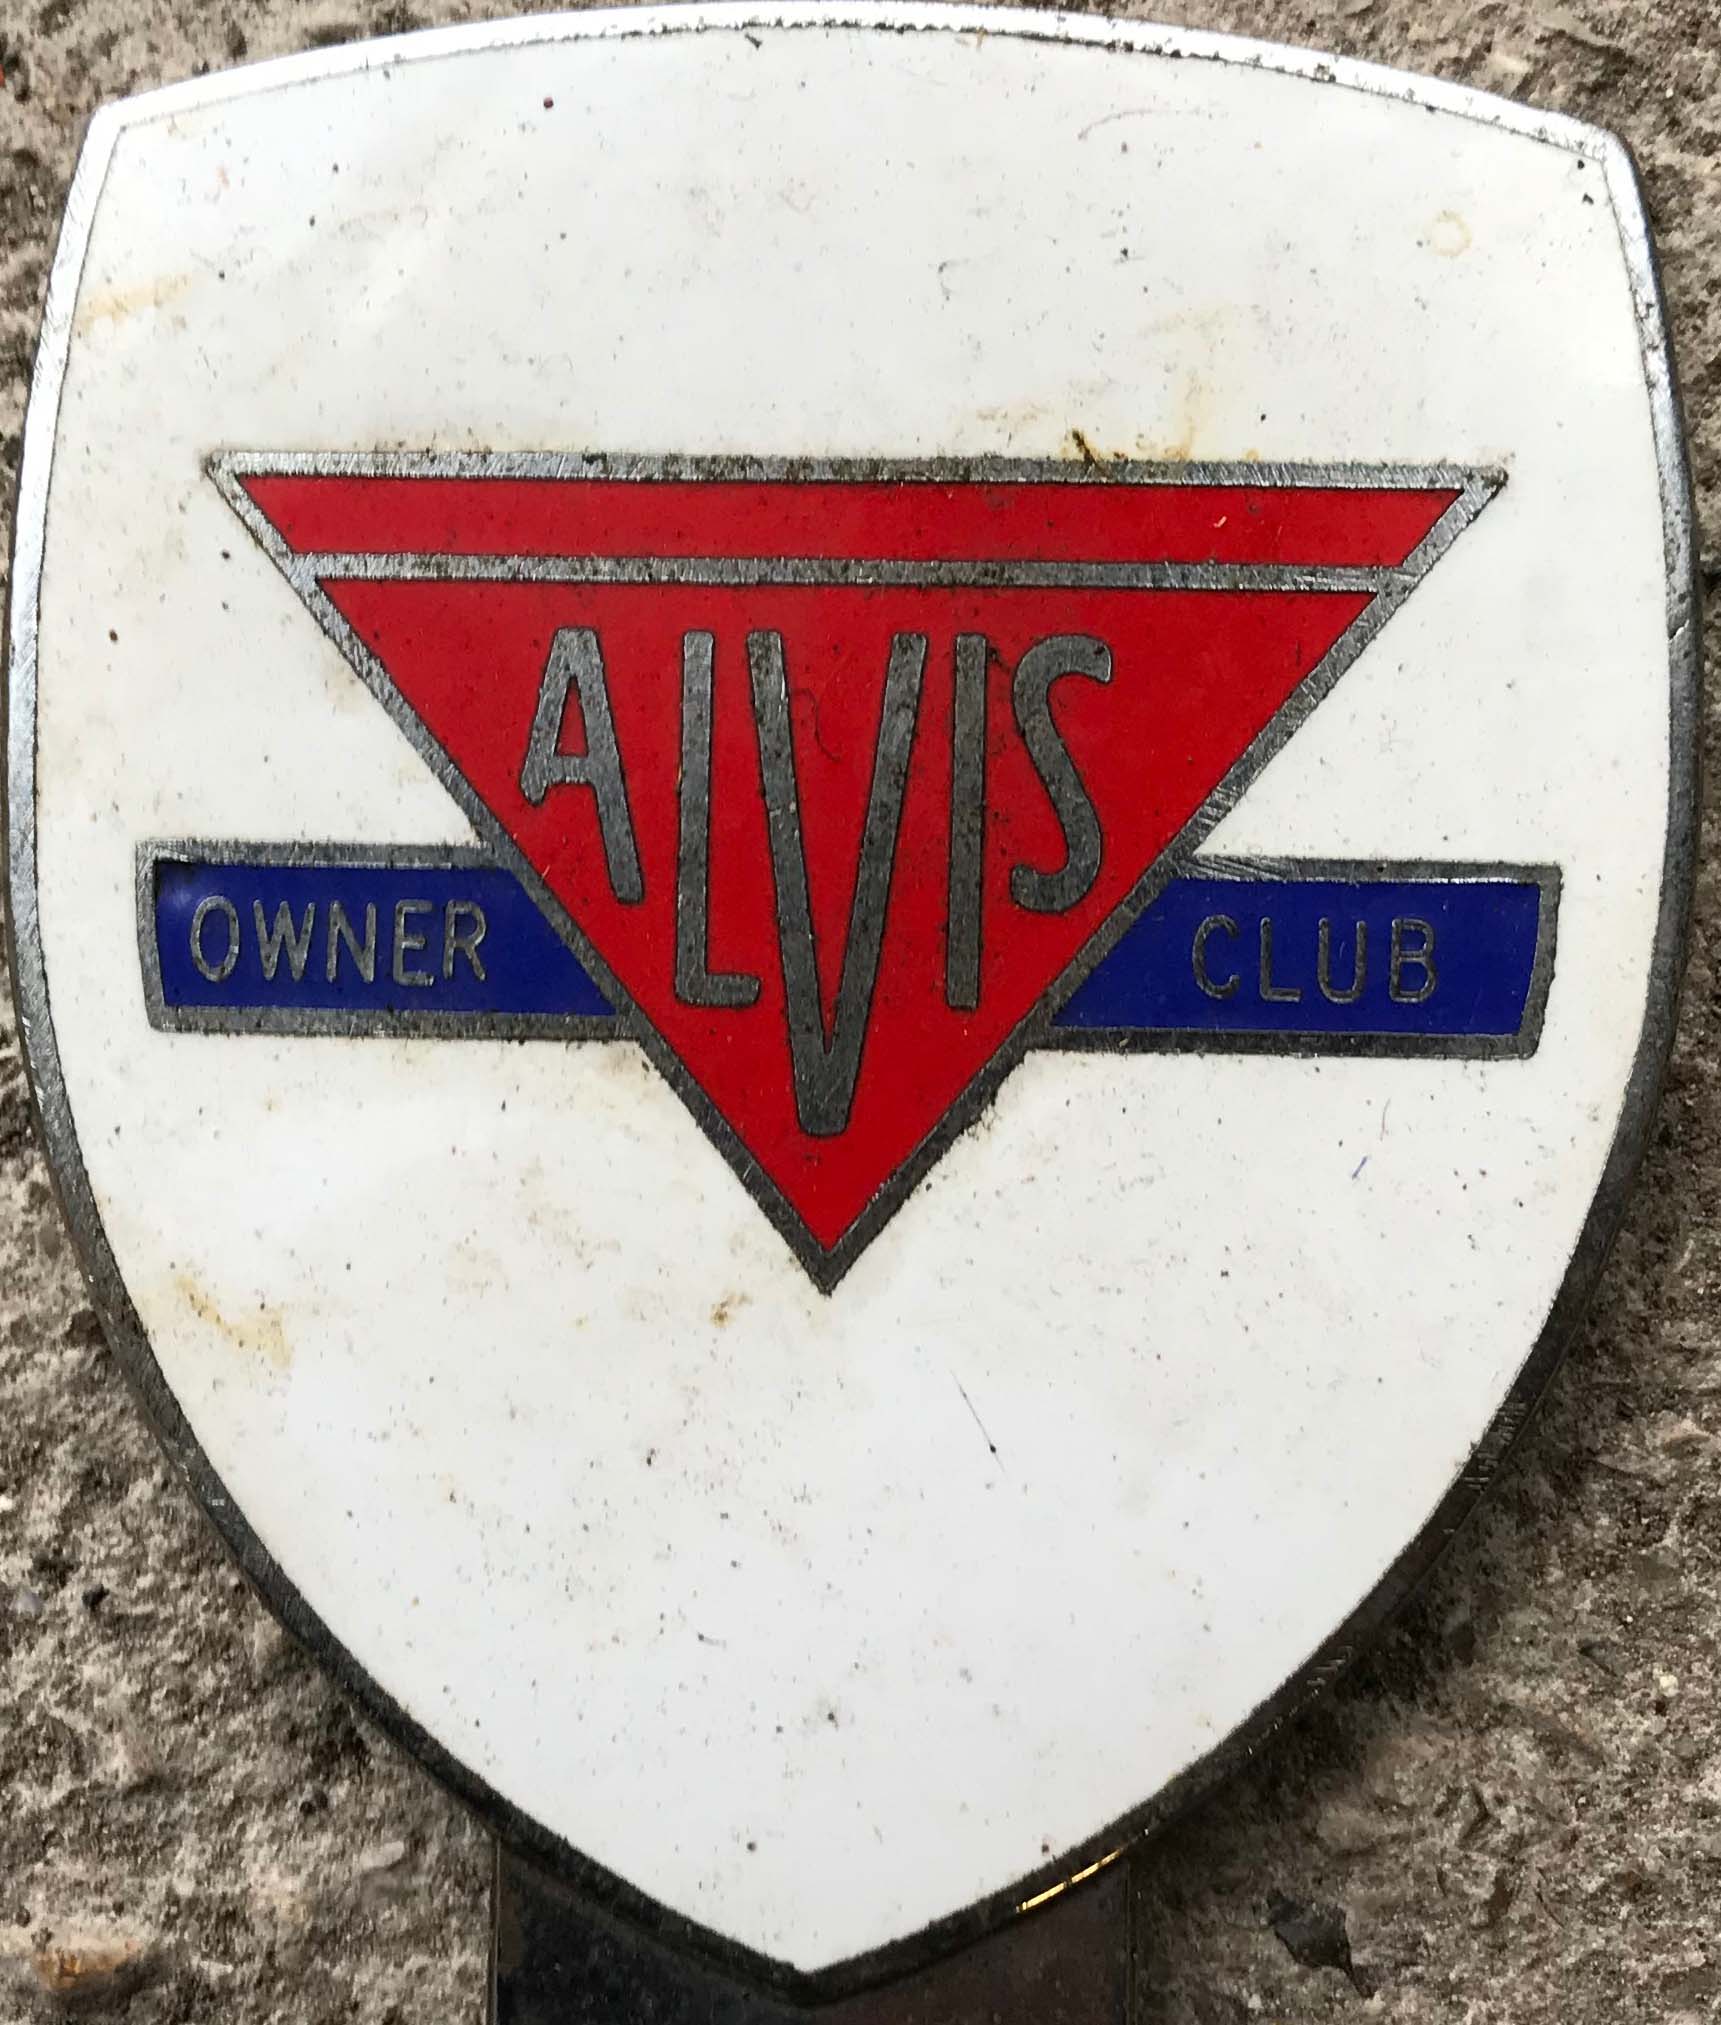 Newer Alvis Owners Club Badge